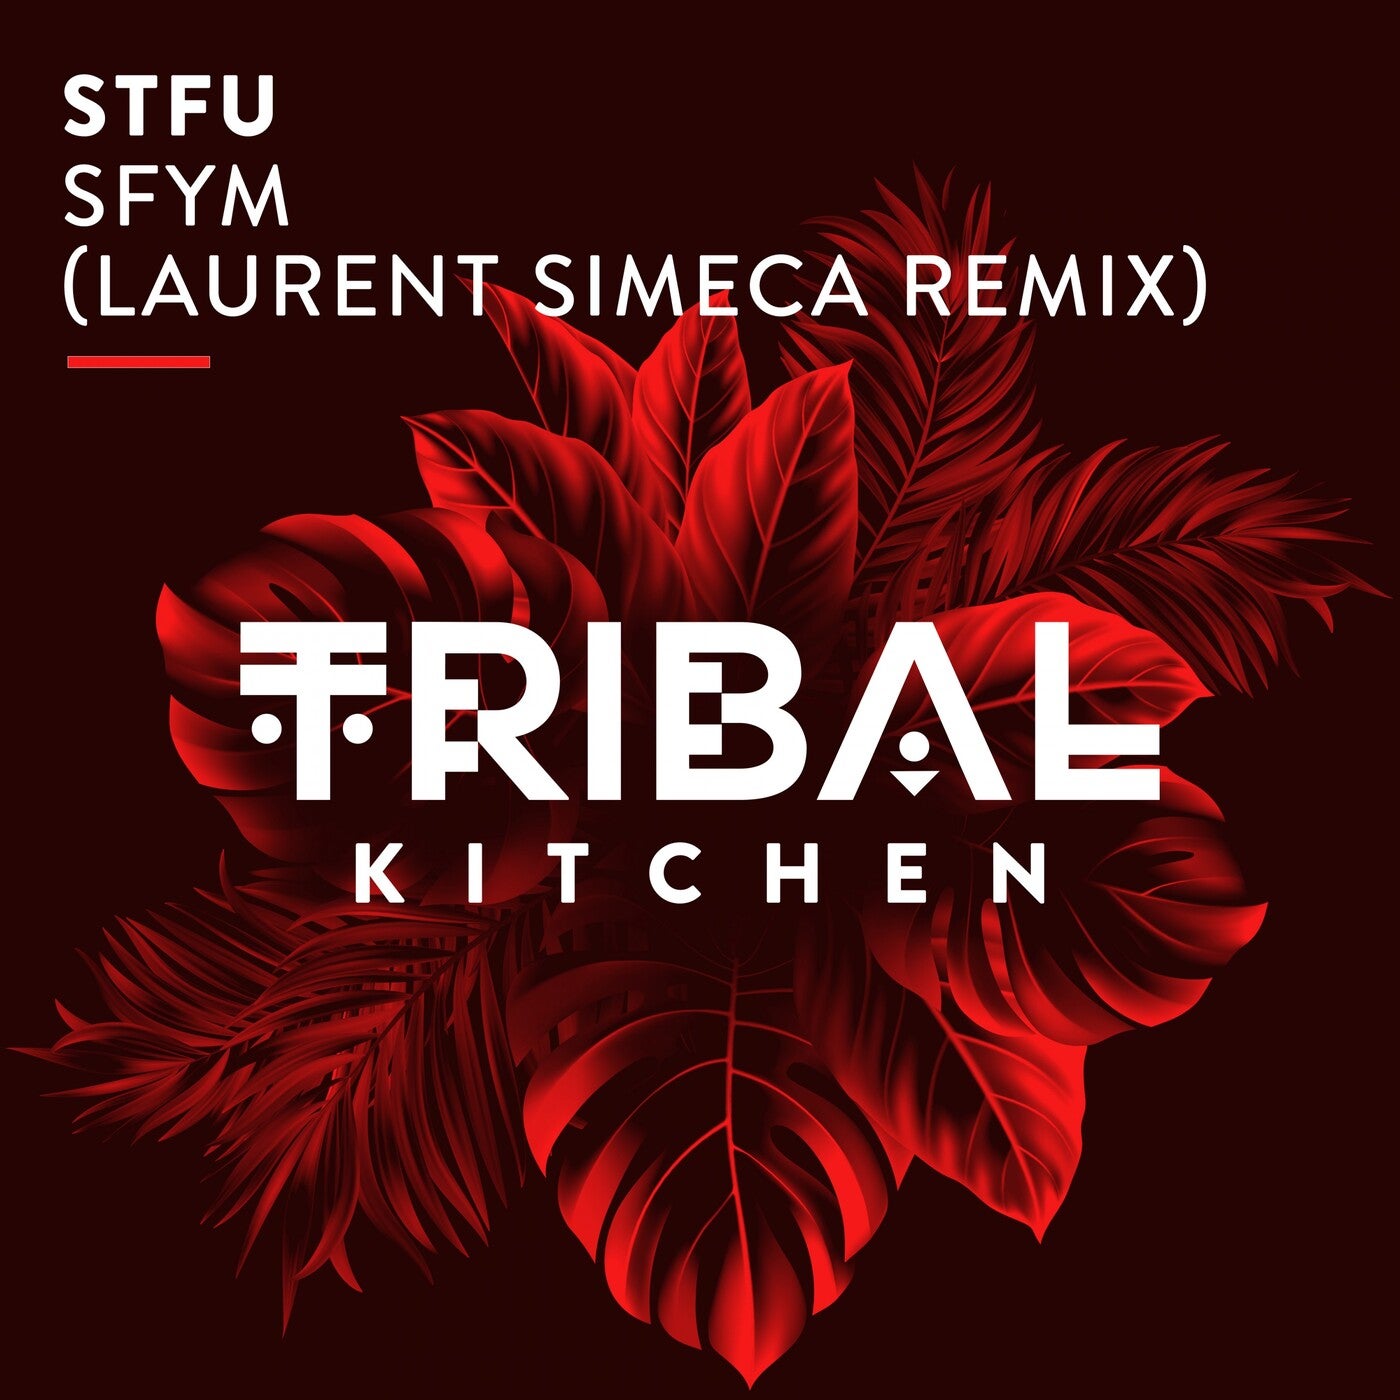 STFU - SFYM 2021 (Laurent Simeca Extended Remix)